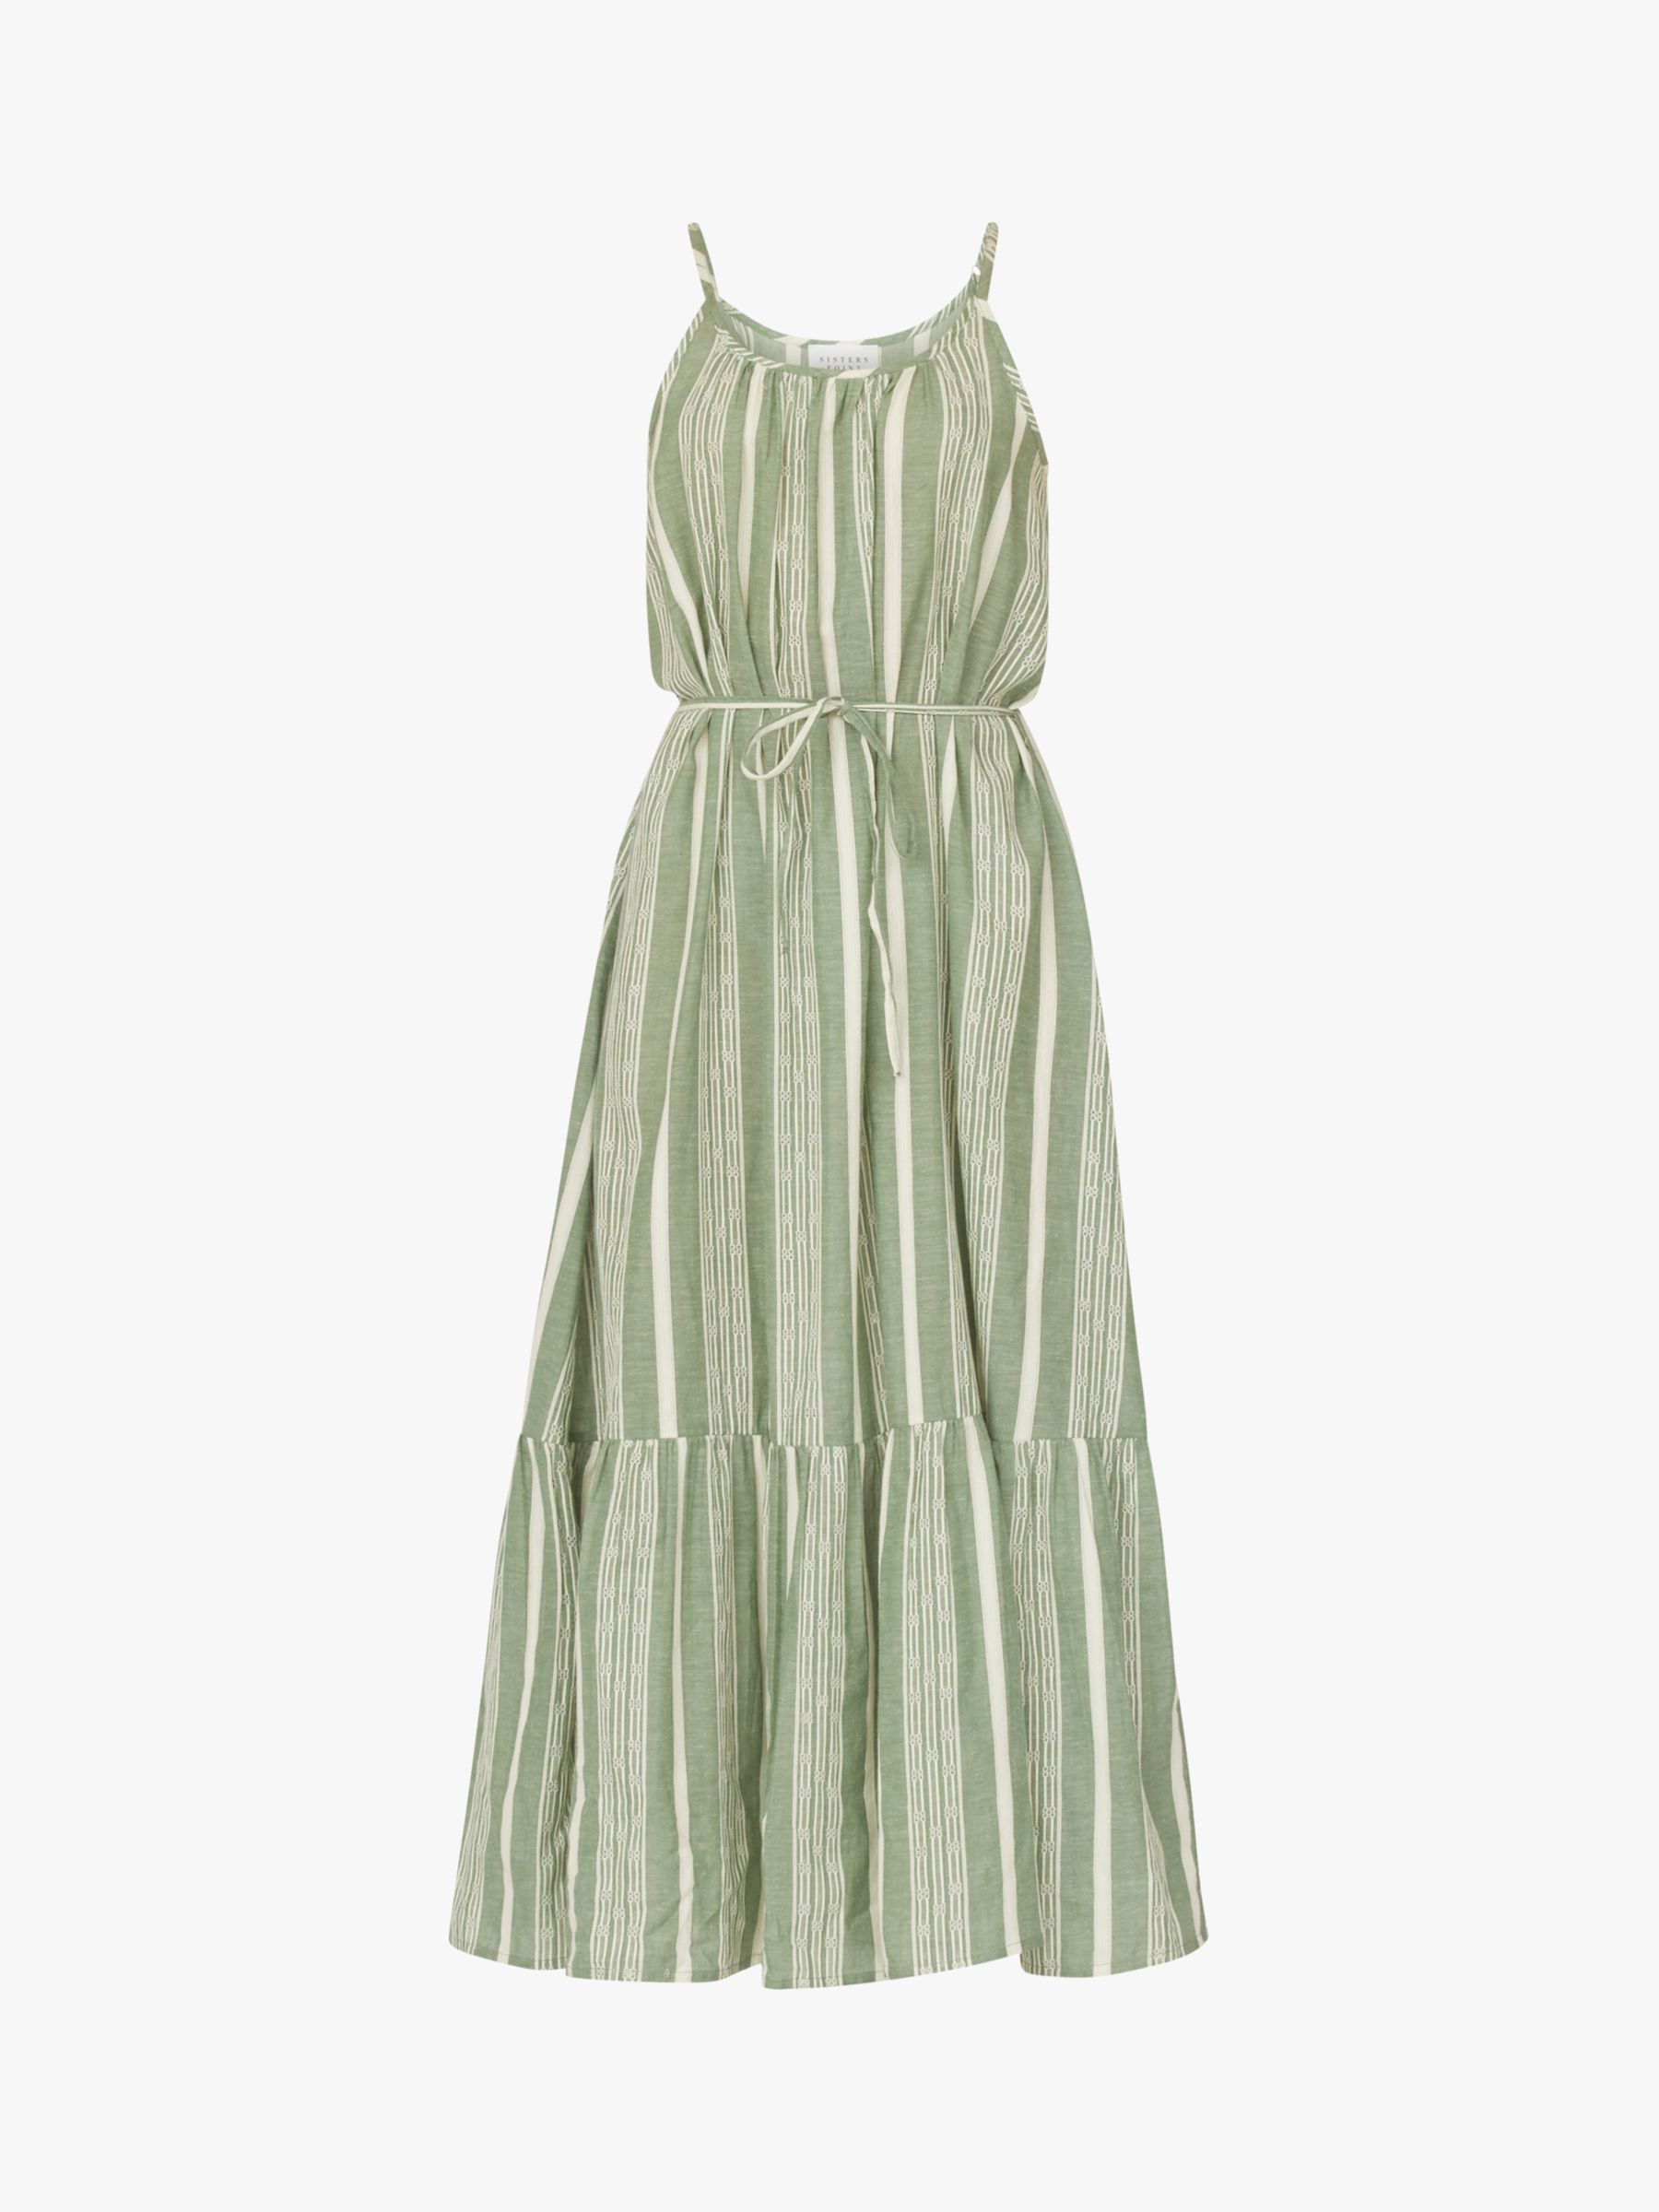 Sisters Point Inga Striped Summer Maxi Dress, Green Comb, XS